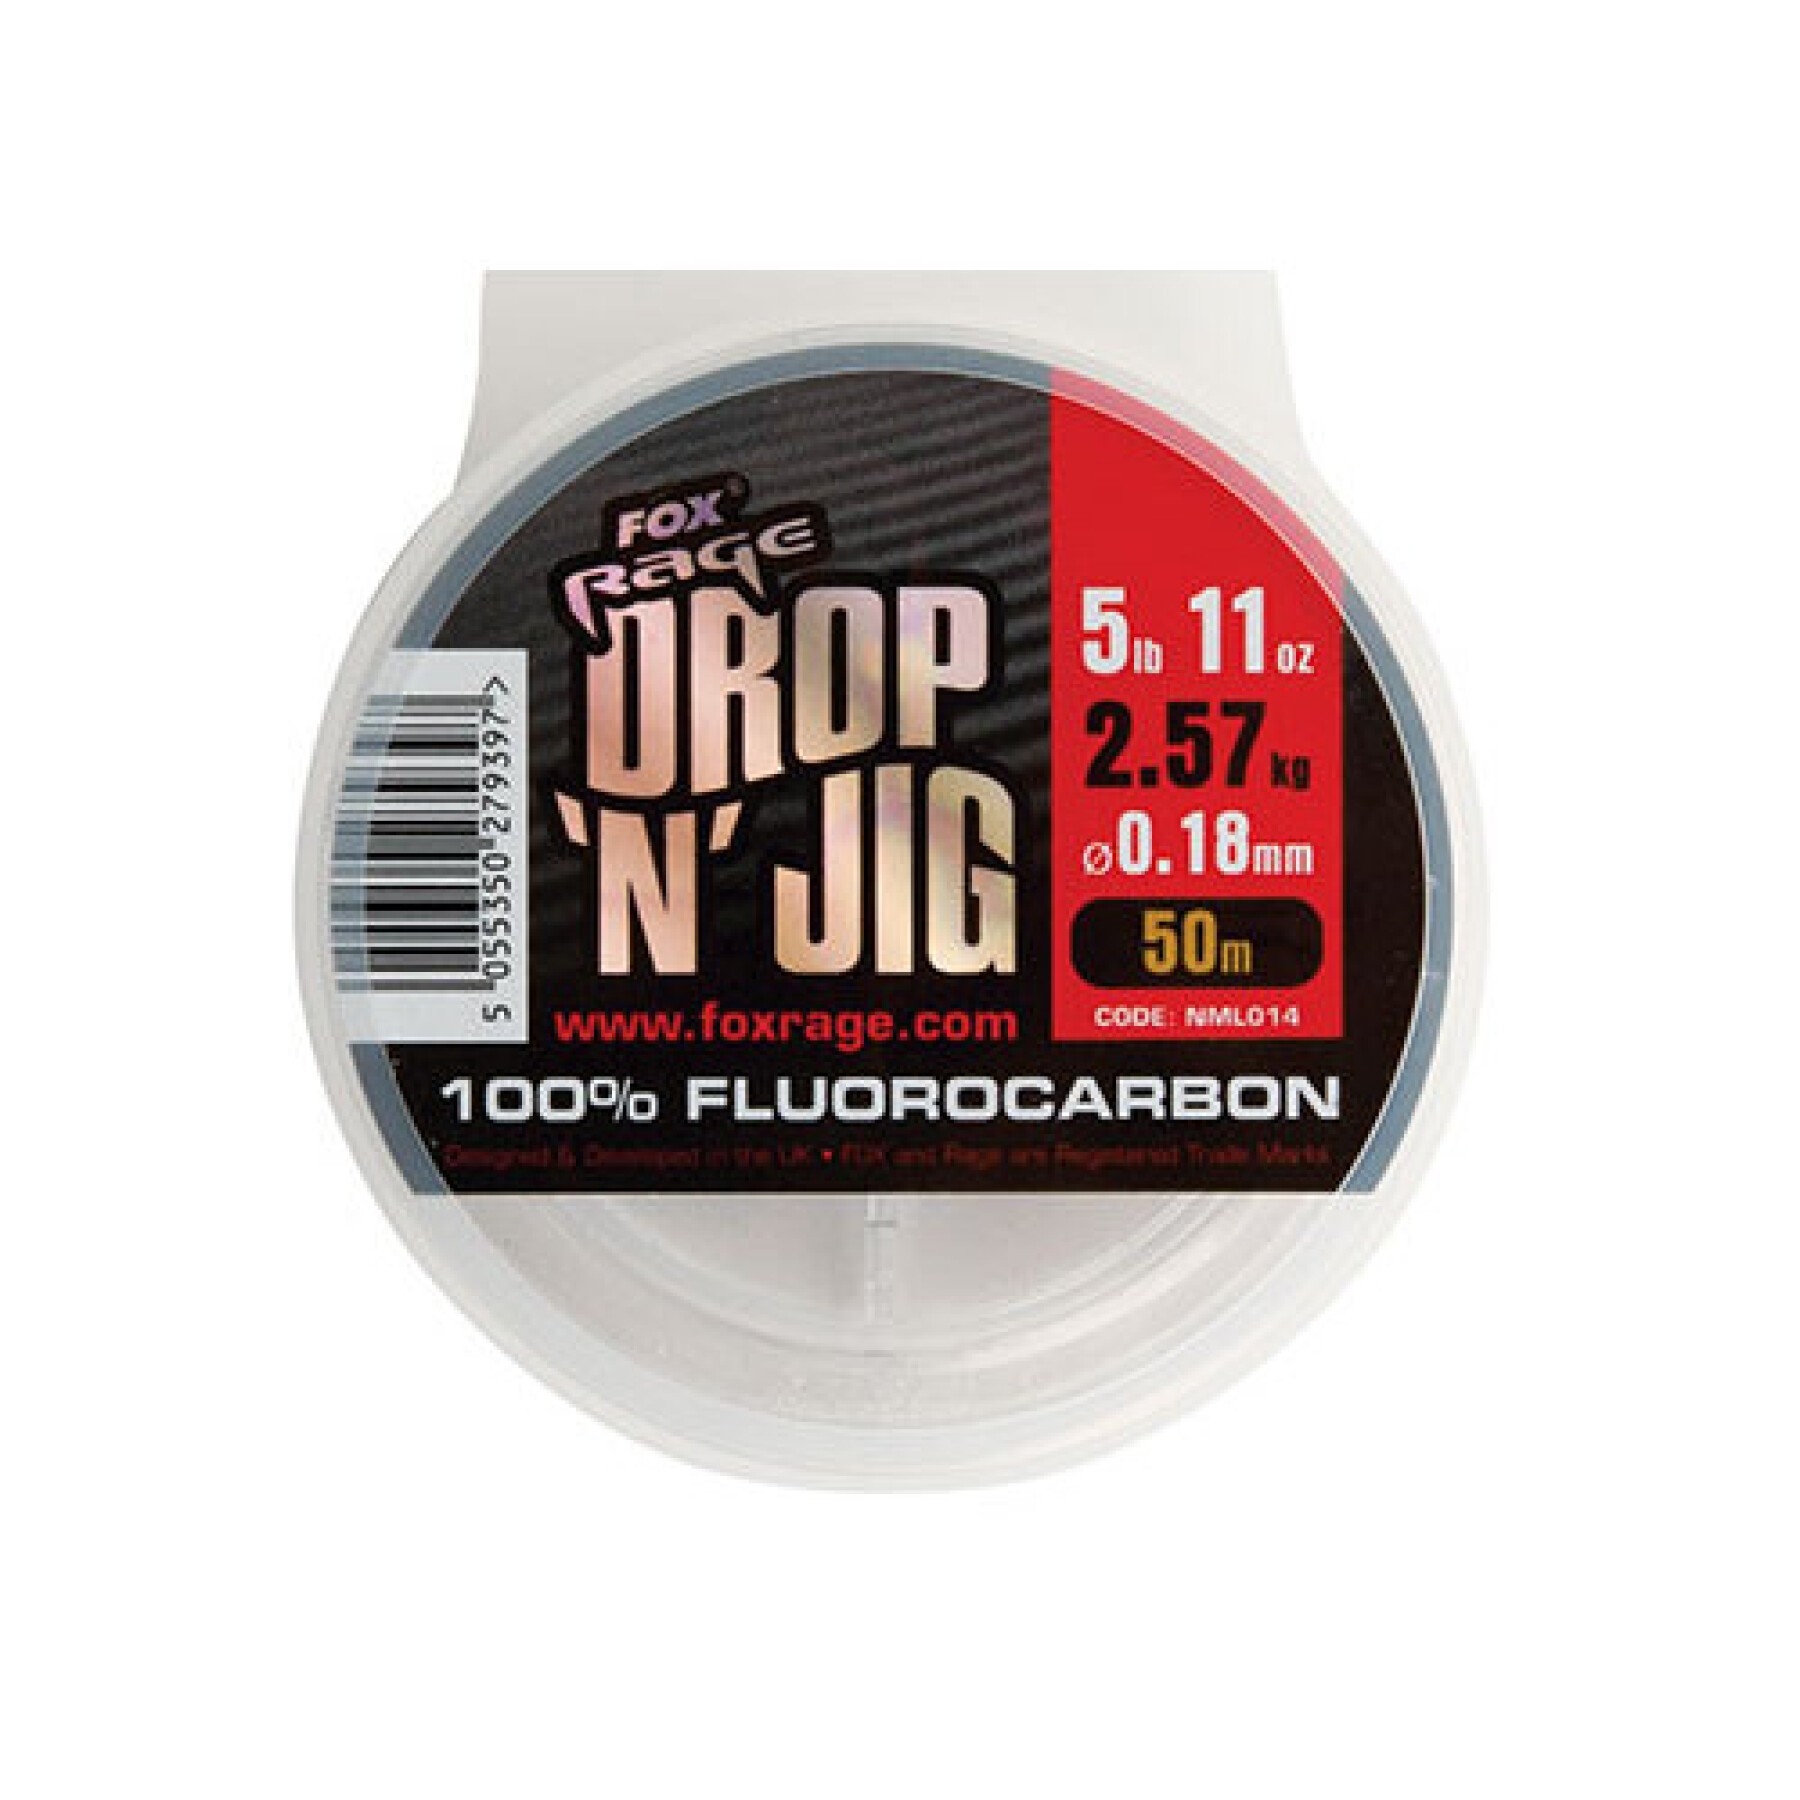 Fluorocarbon Fox Rage drop & jig 7.52kg / 16.58lb x 50m